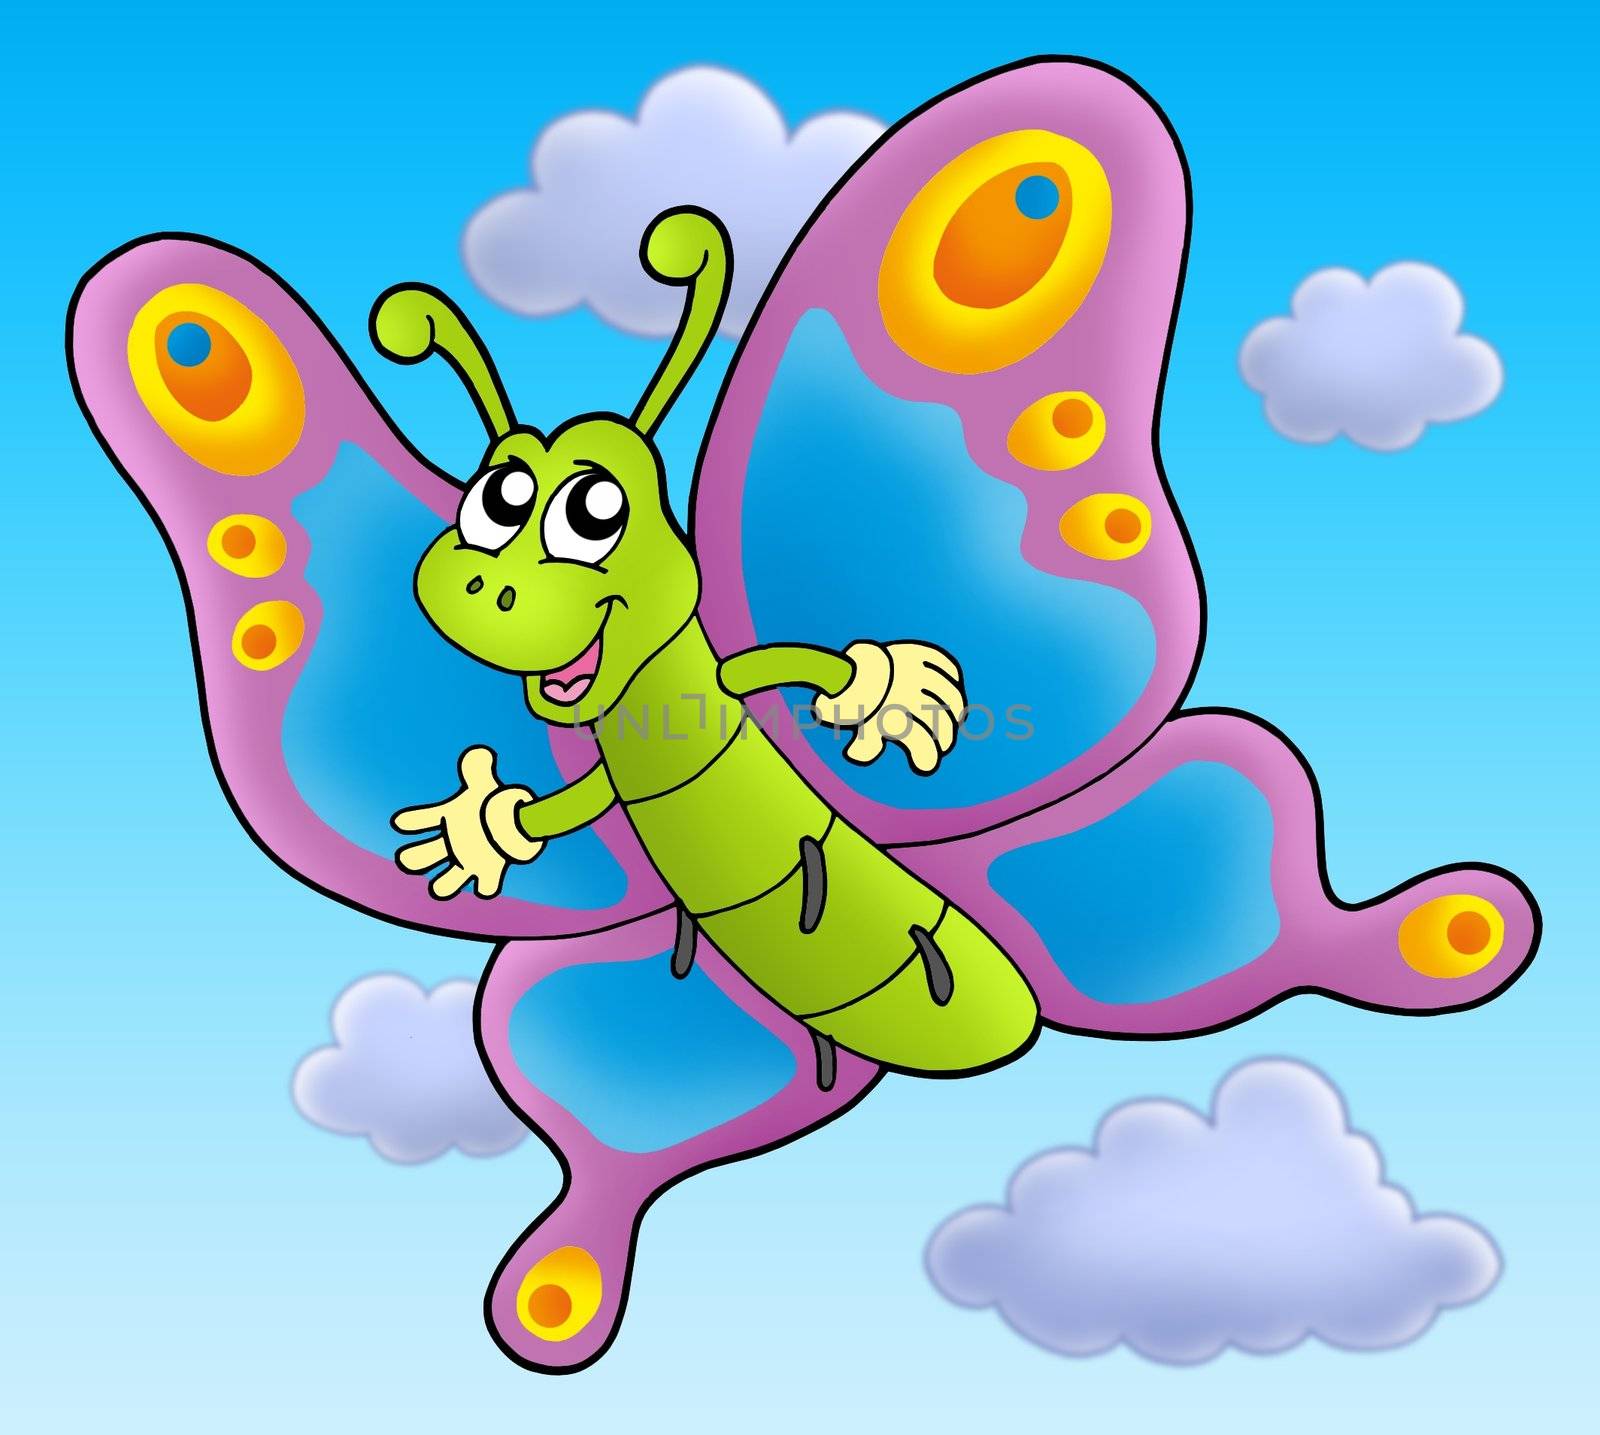 Cute cartoon butterfly on sky - color illustration.